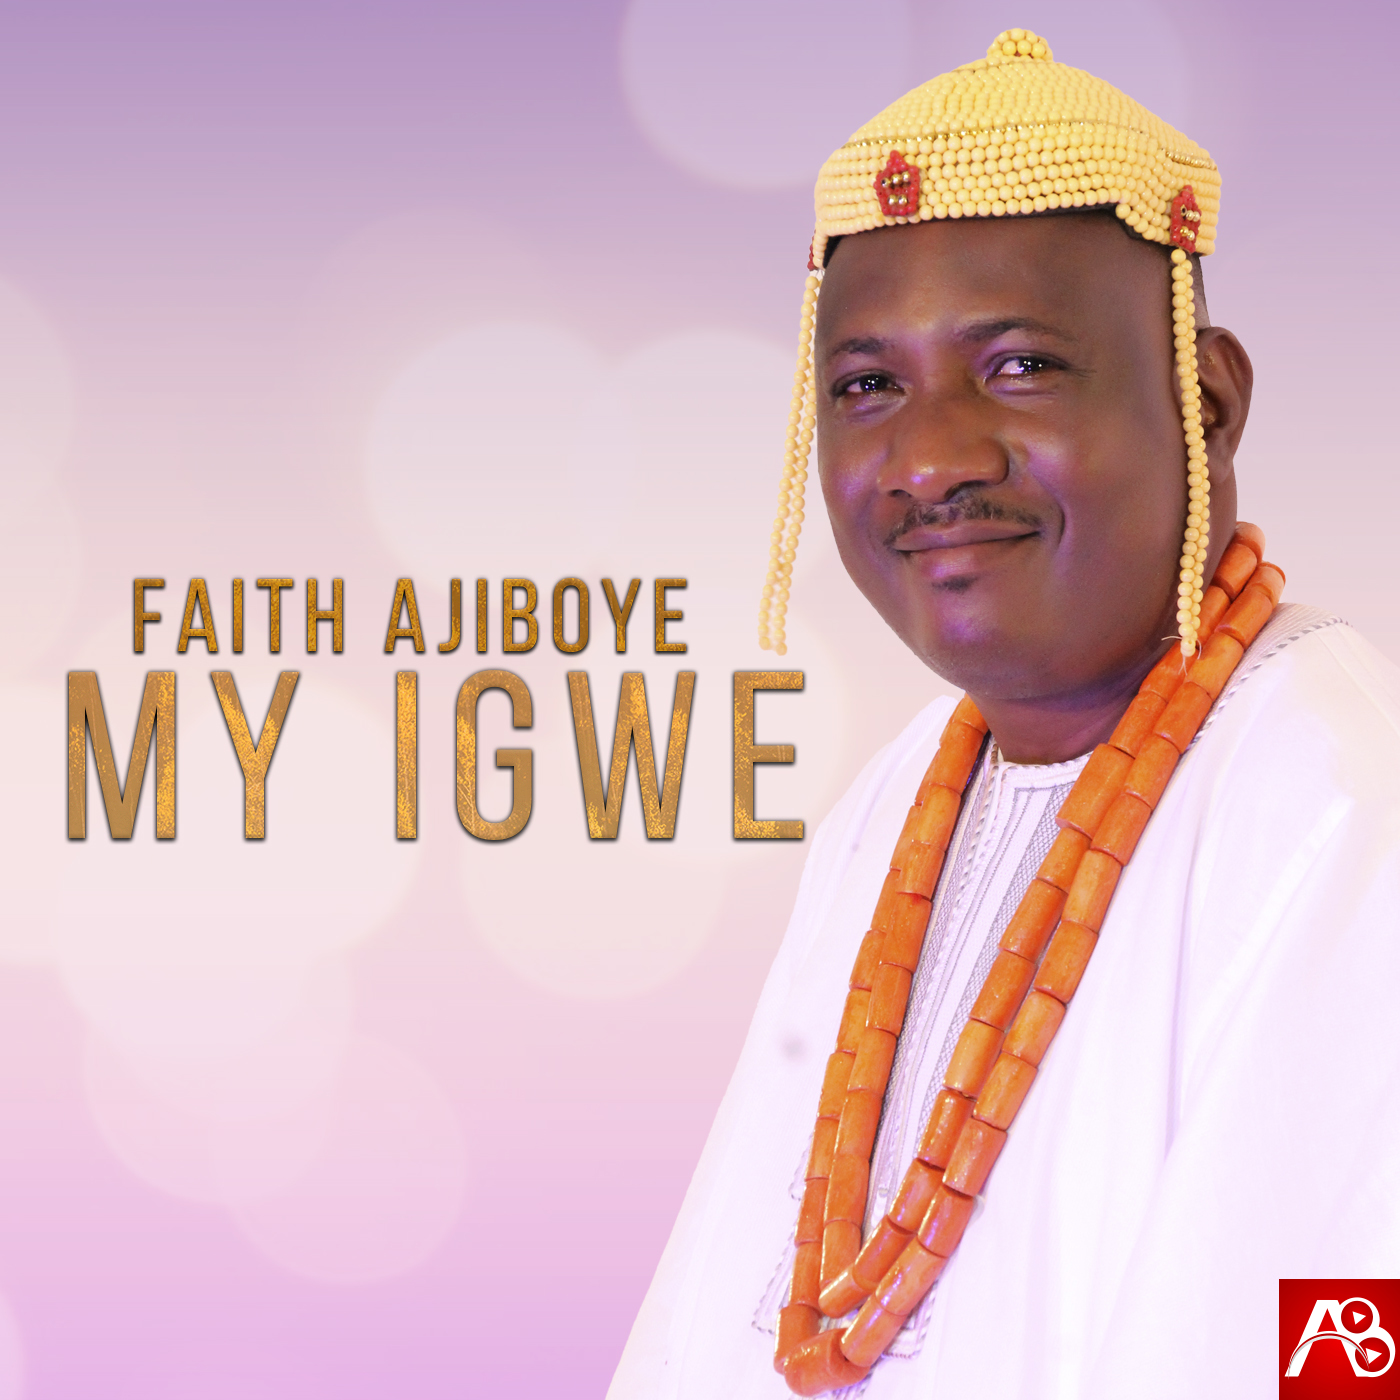 Faith Ajiboye My Igwe